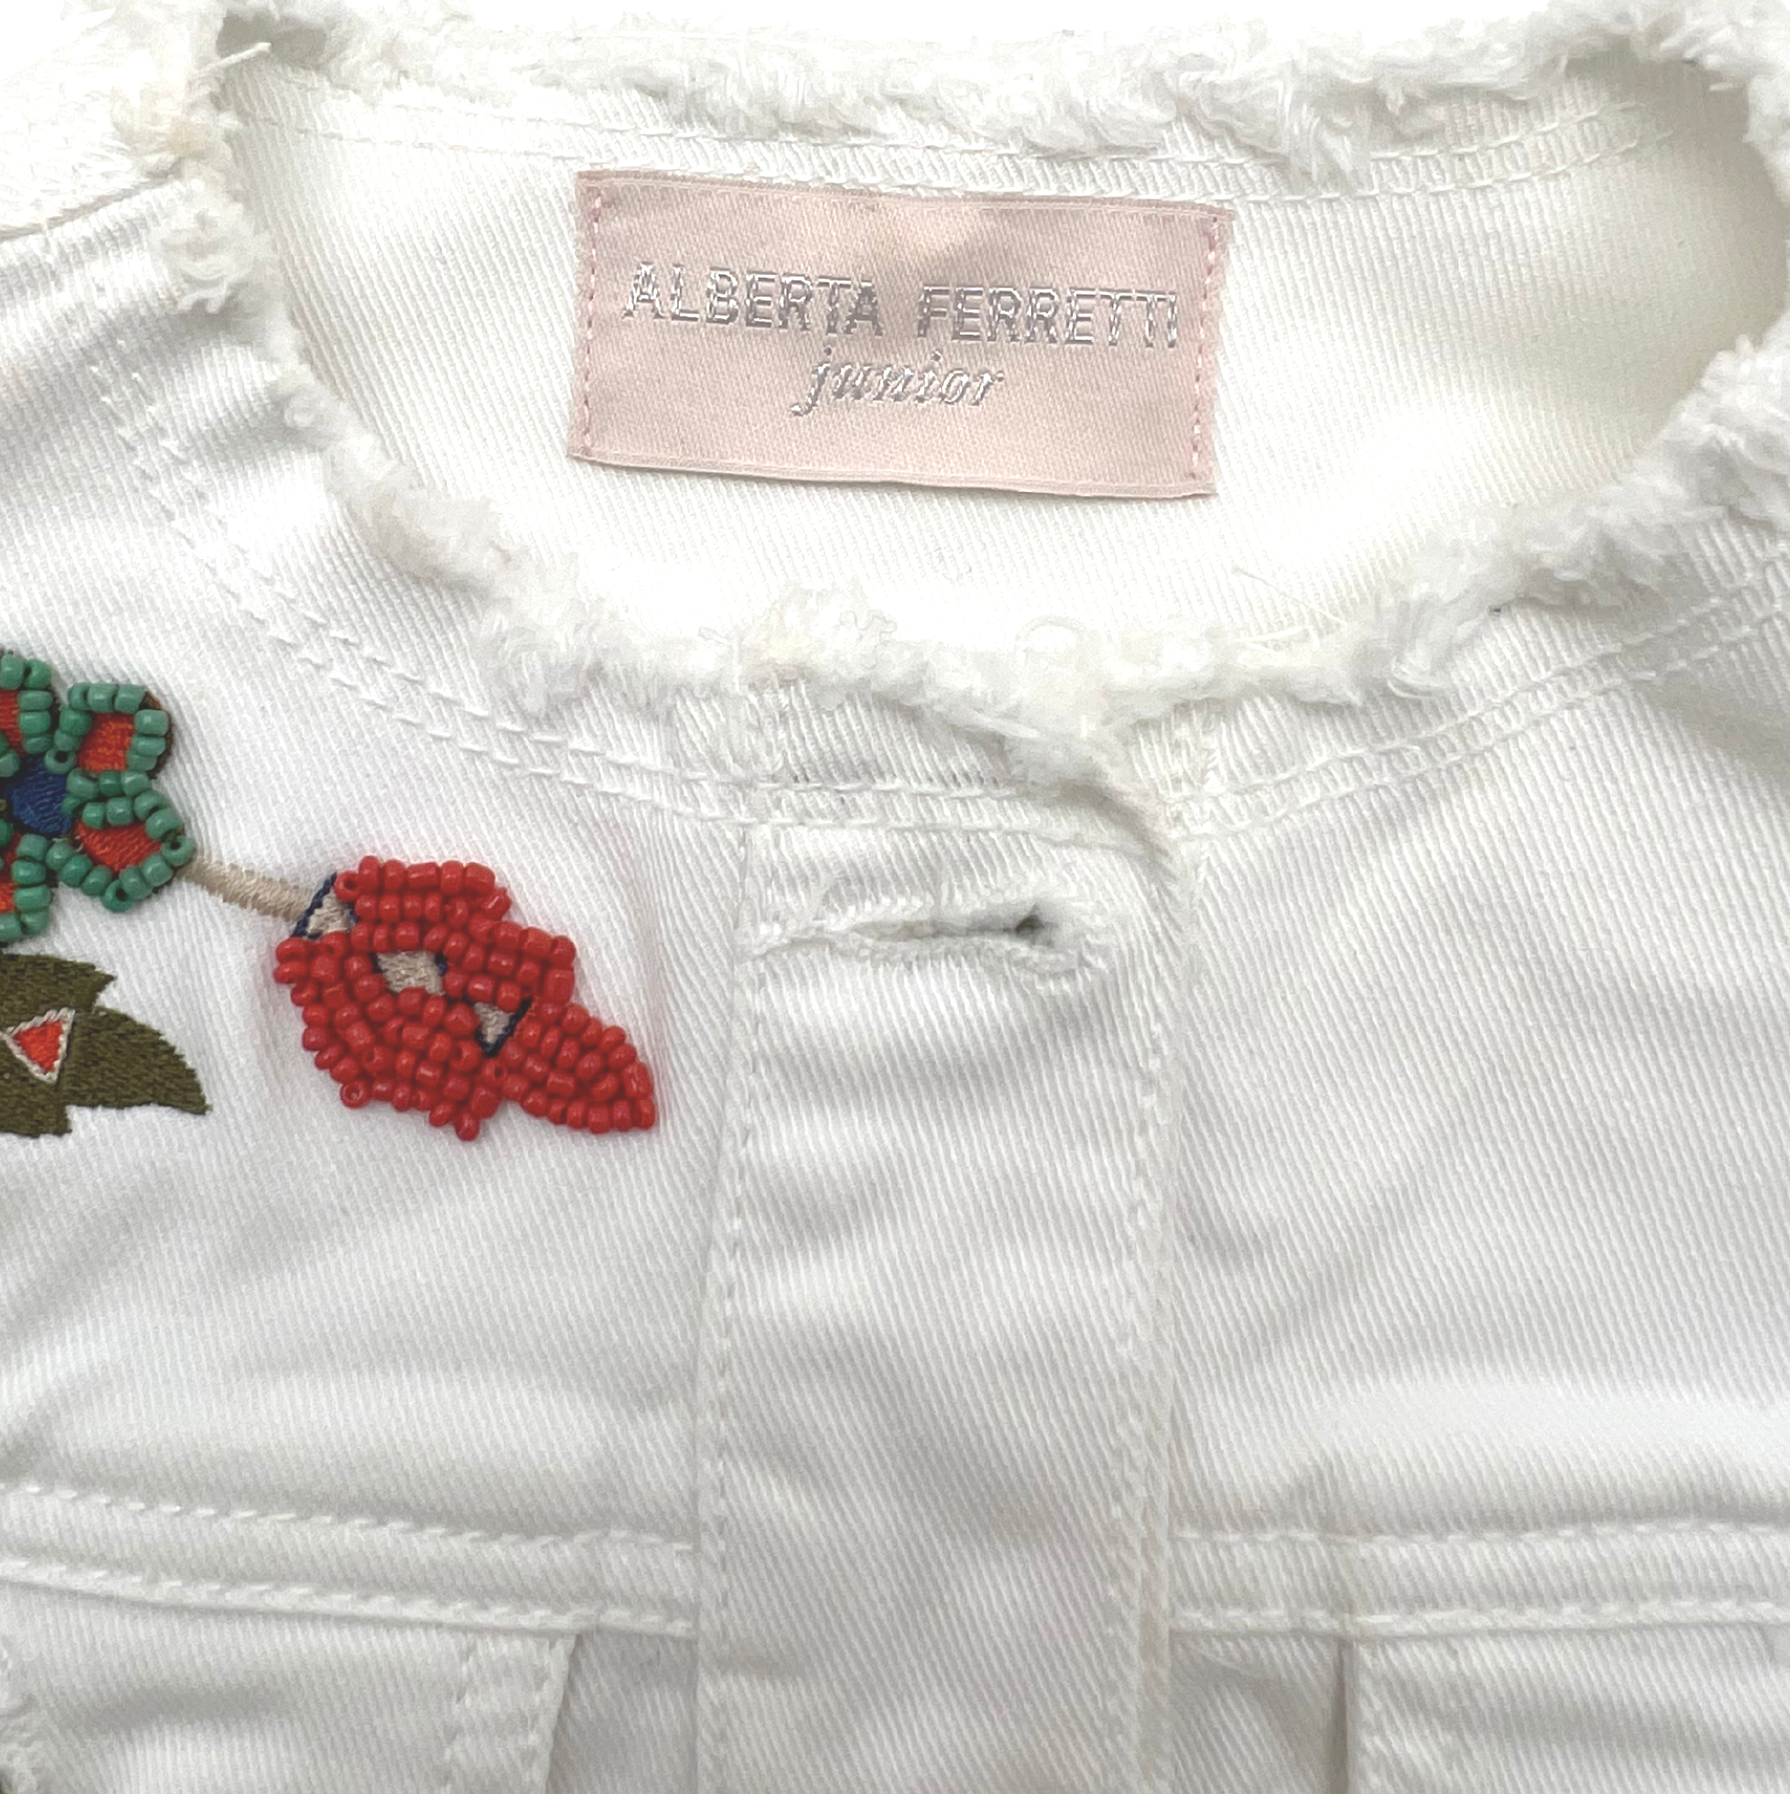 ALBERTA FERRETTI - Sleeveless denim jacket with embroidery &amp; pearls - 8 years old